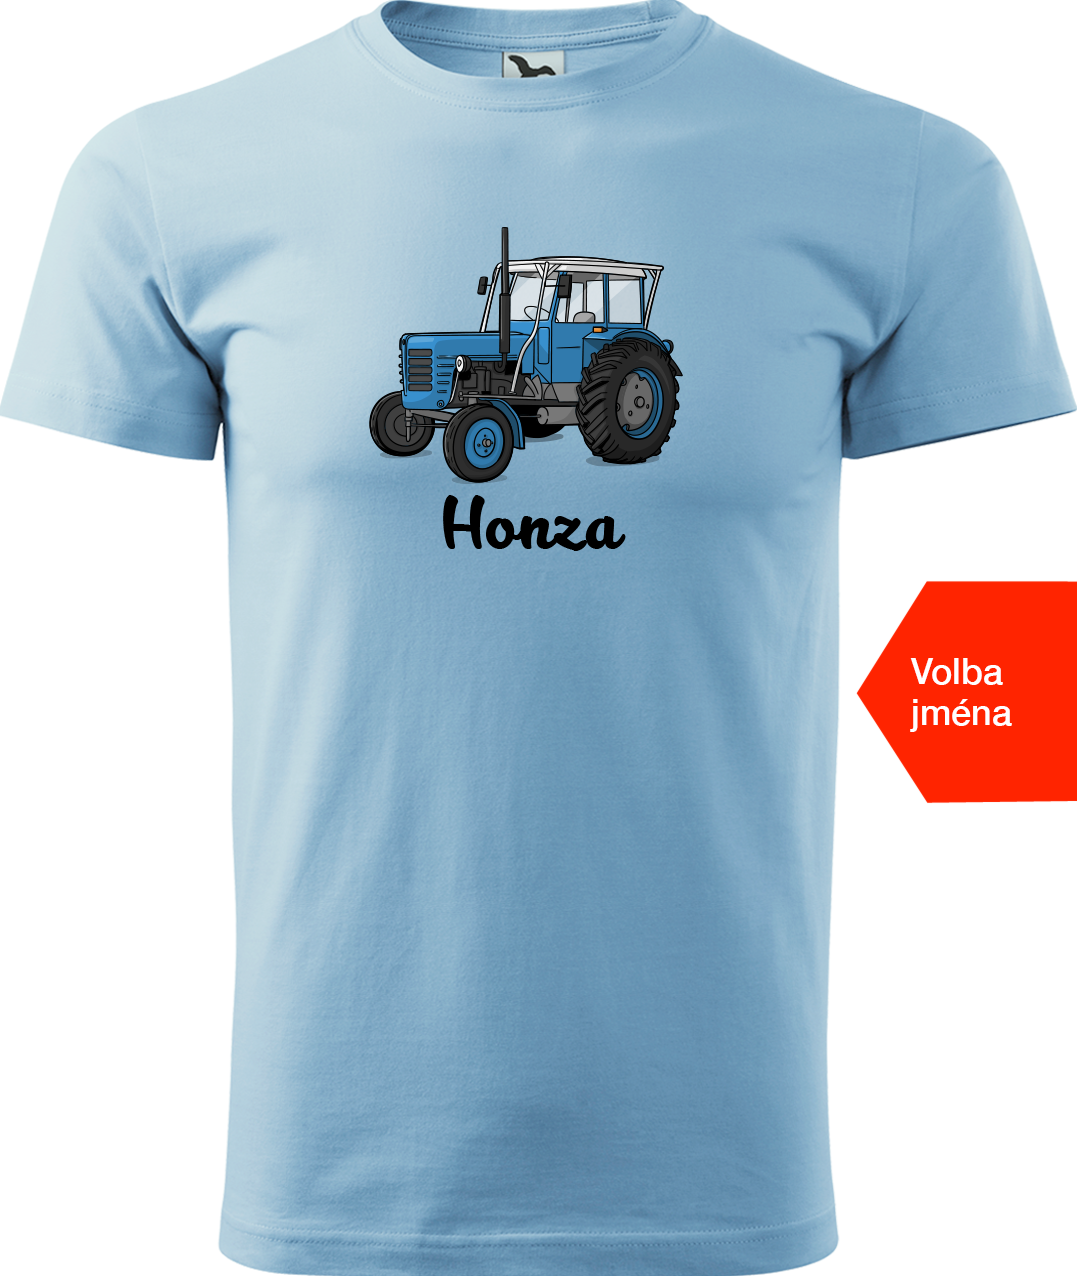 Tričko s traktorem a jménem - Starý traktor Velikost: XL, Barva: Nebesky modrá (15)